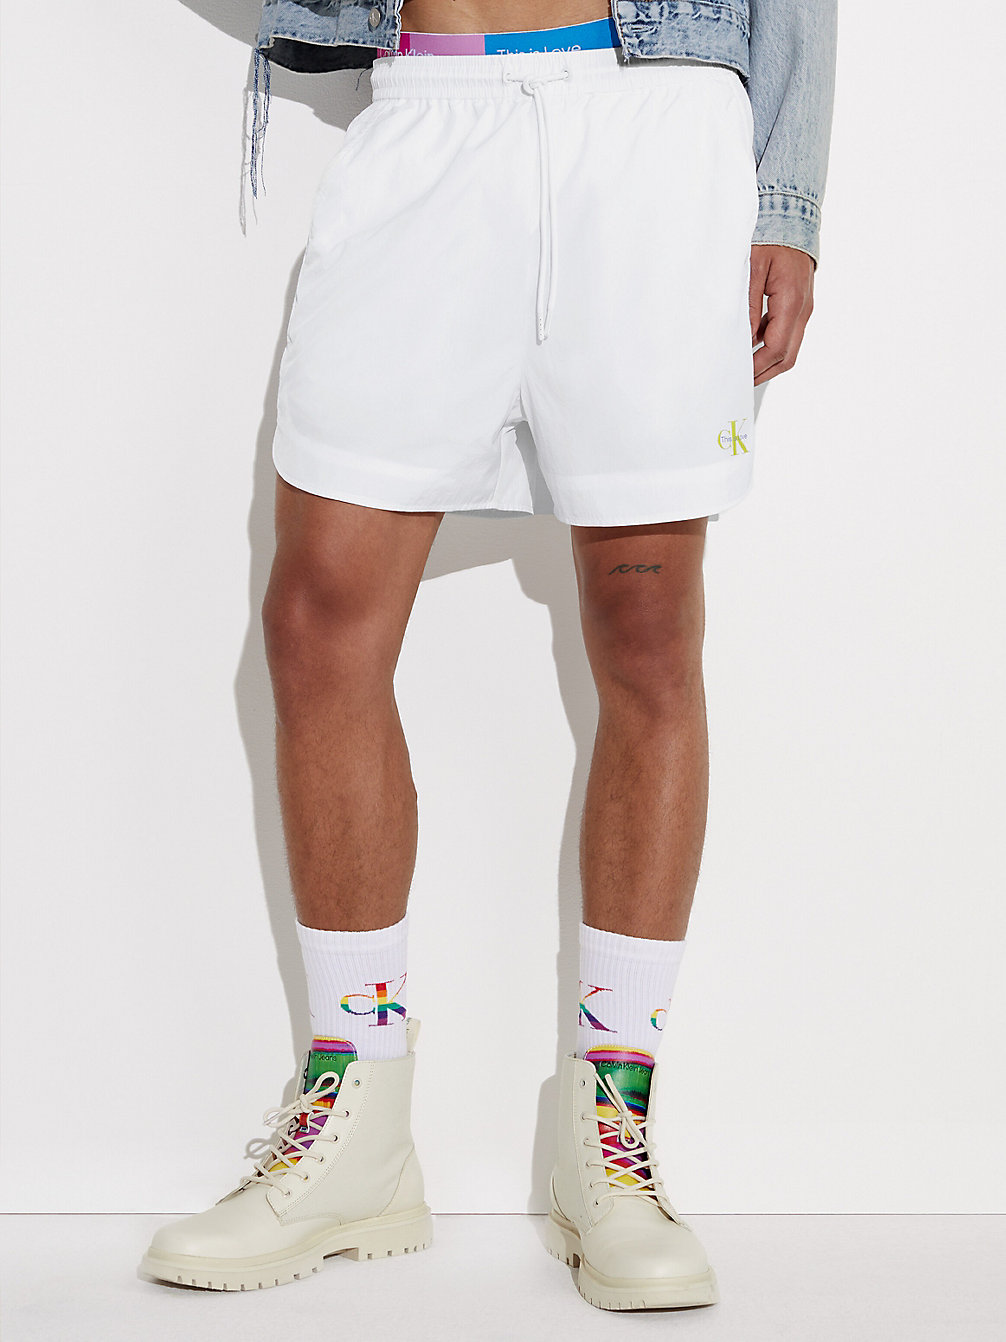 BRIGHT WHITE Unisex Nylon Runner Shorts - Pride undefined unisex Calvin Klein